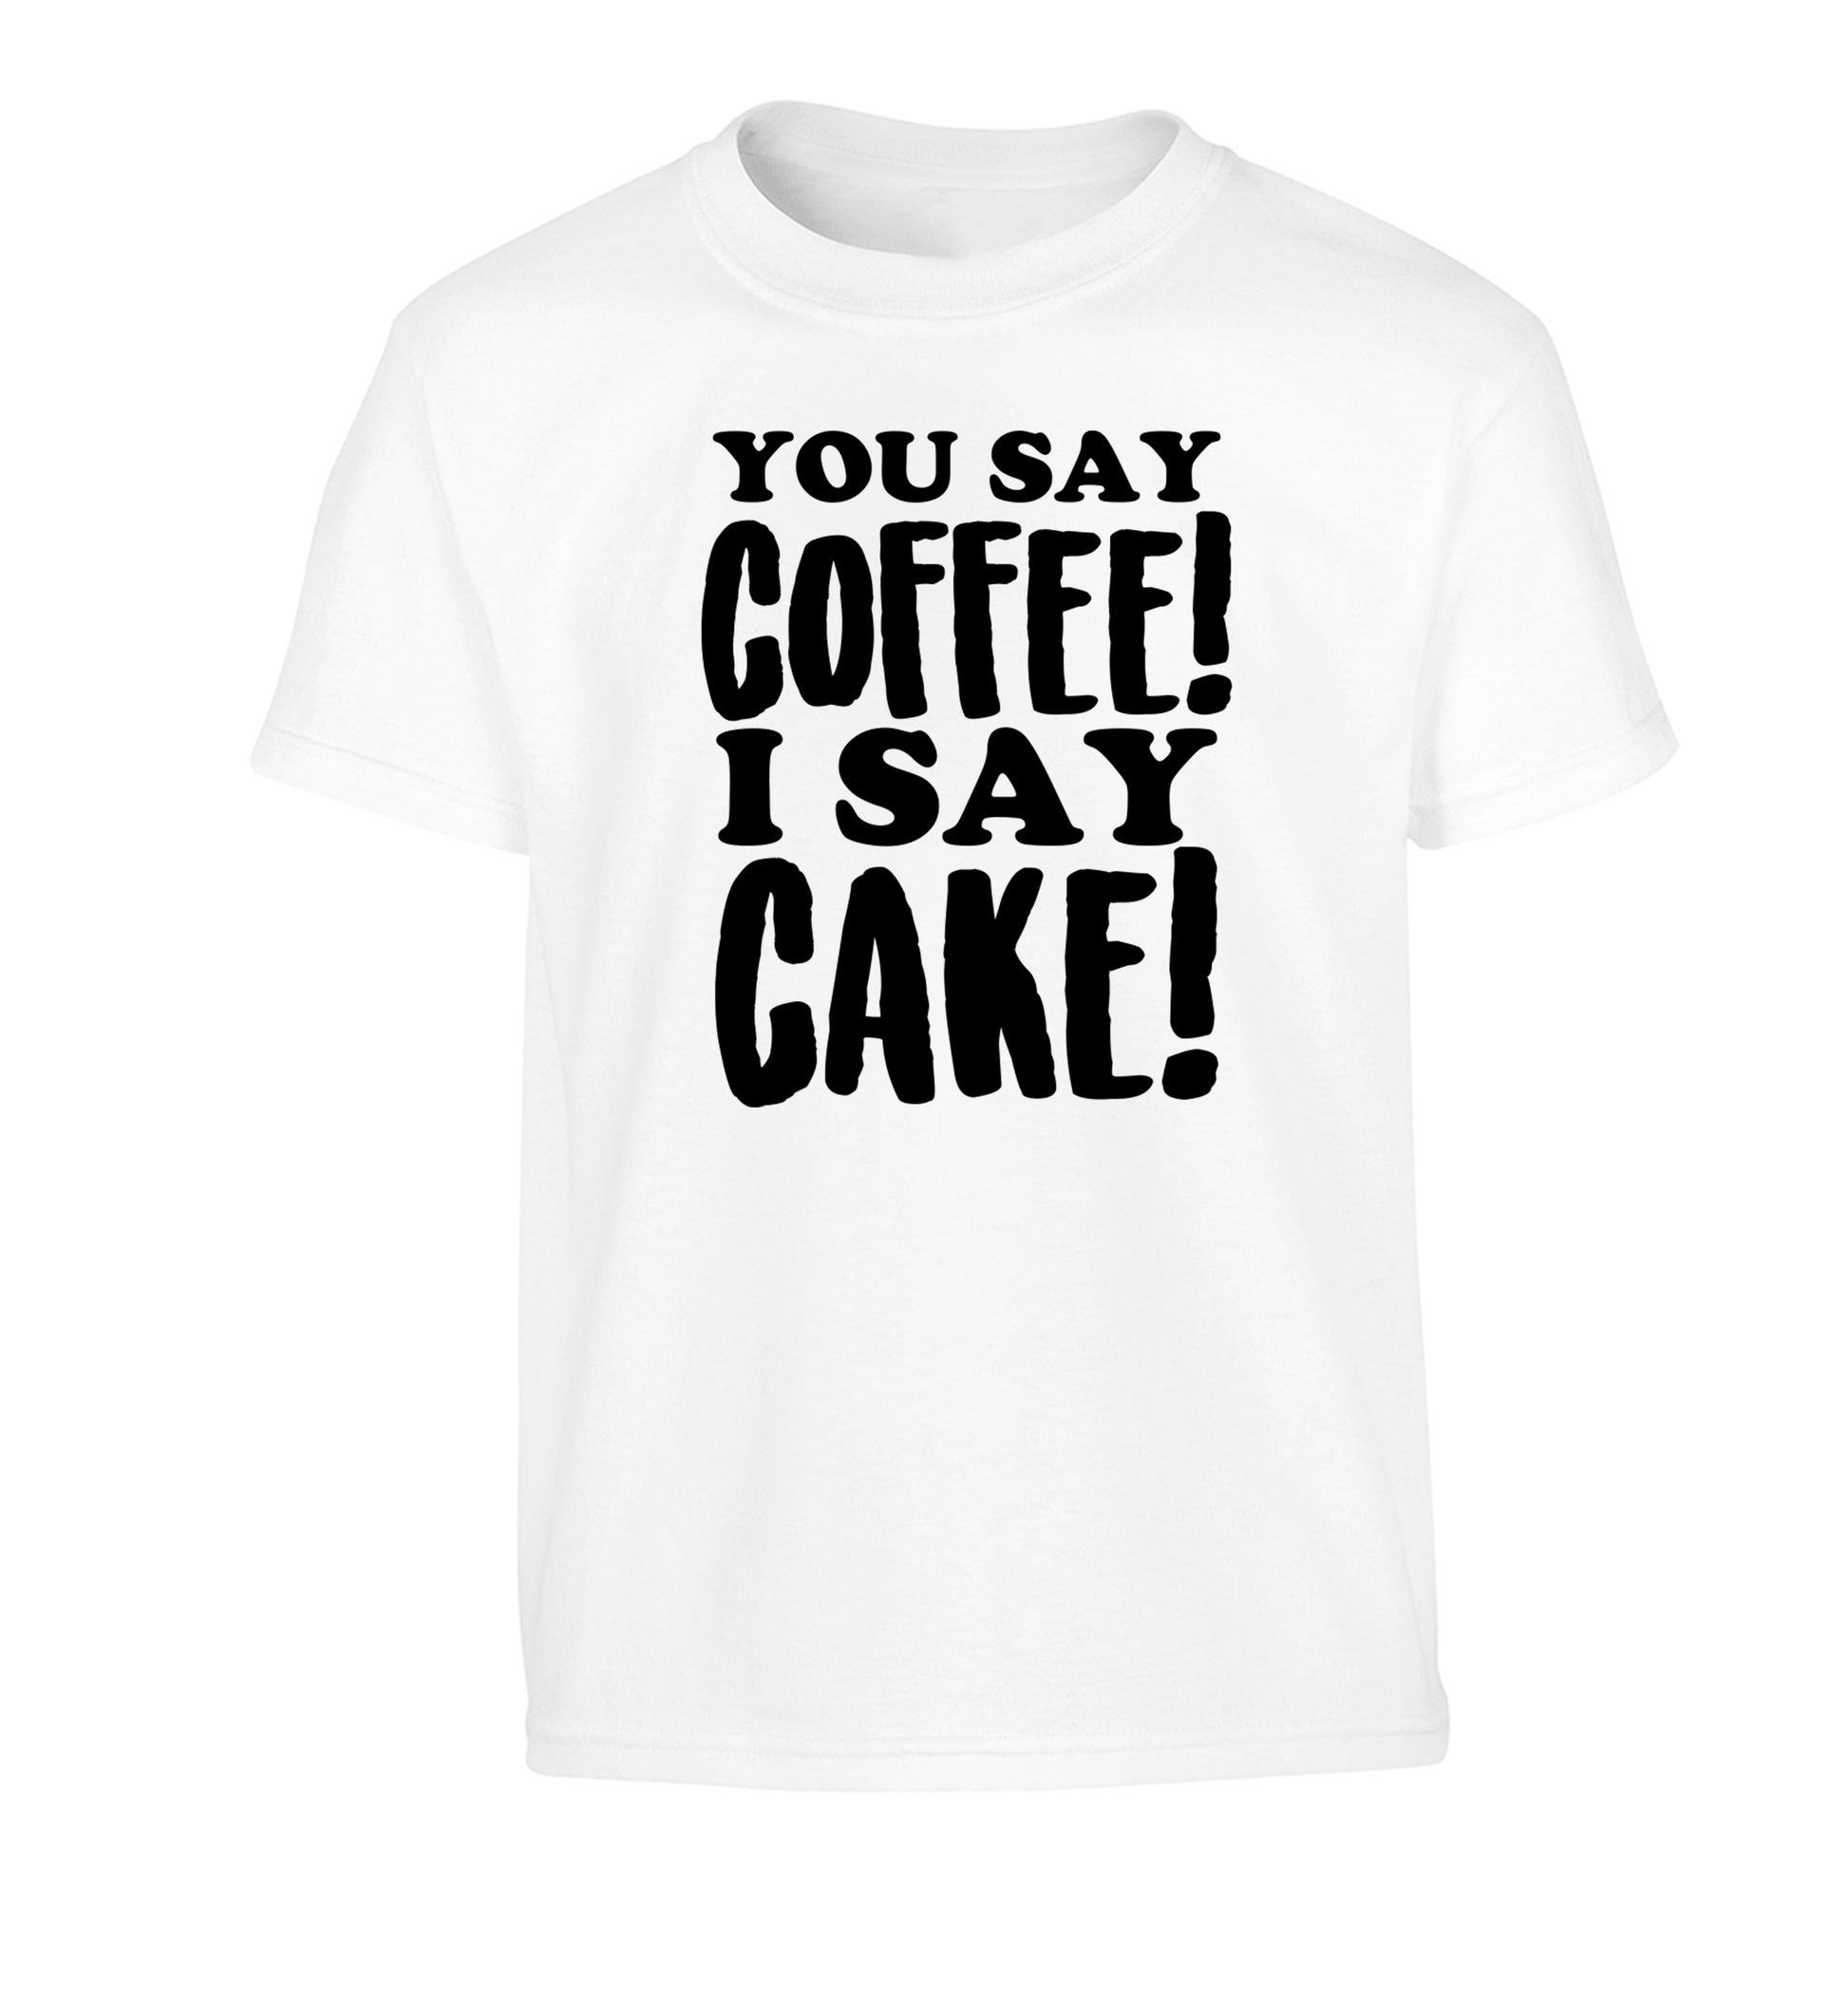 You say coffee I say cake! Children's white Tshirt 12-14 Years